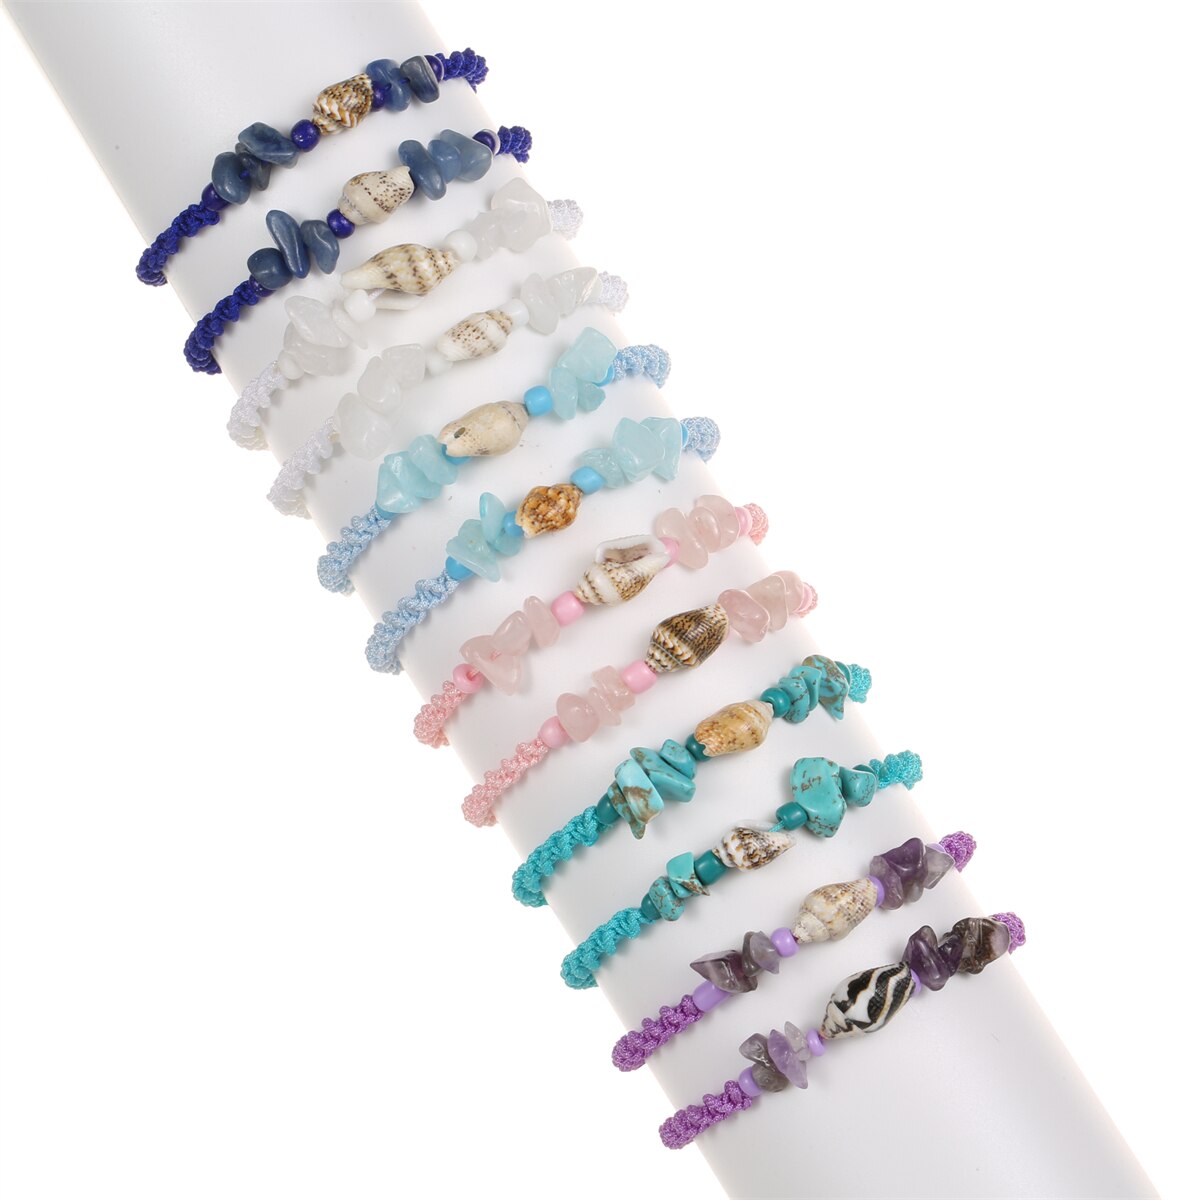 12pcs/lot Summer Surf Shell Conch Bracelet Women Men Natural Stone Amethyst Turquoise Healing Yoga Bracelet Jewelry